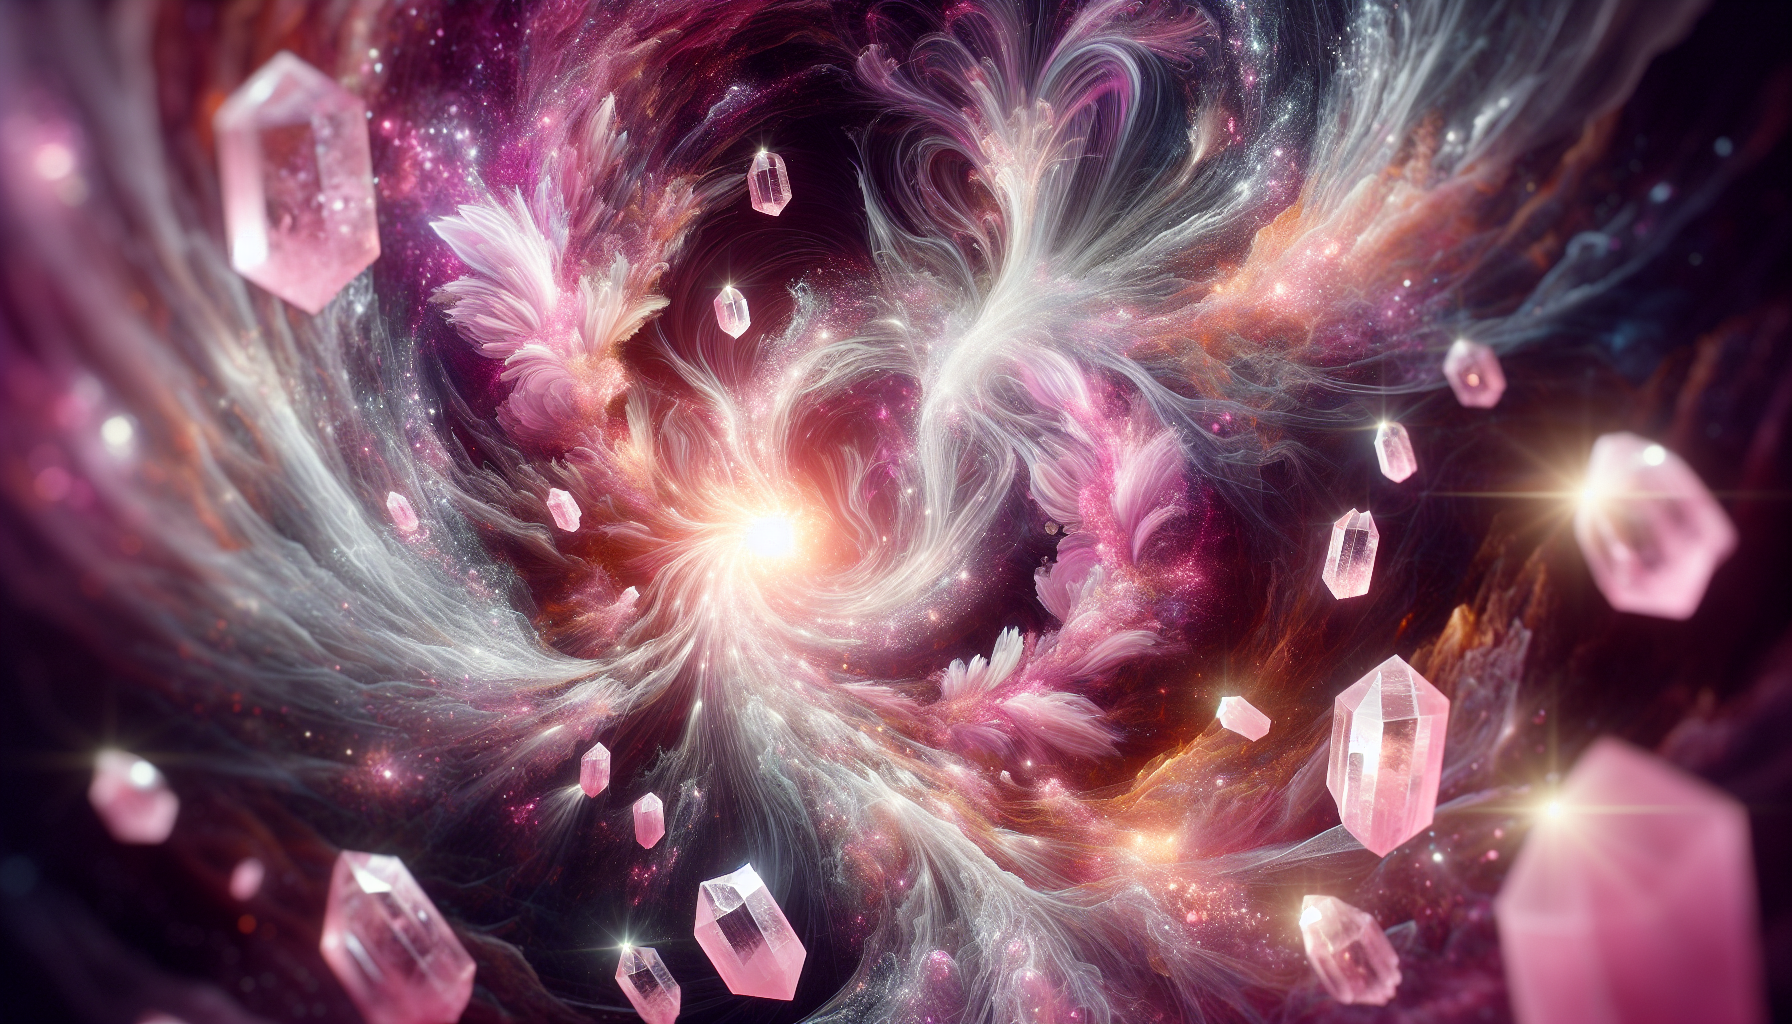 Artistic representation of pure love energy connected to rose quartz